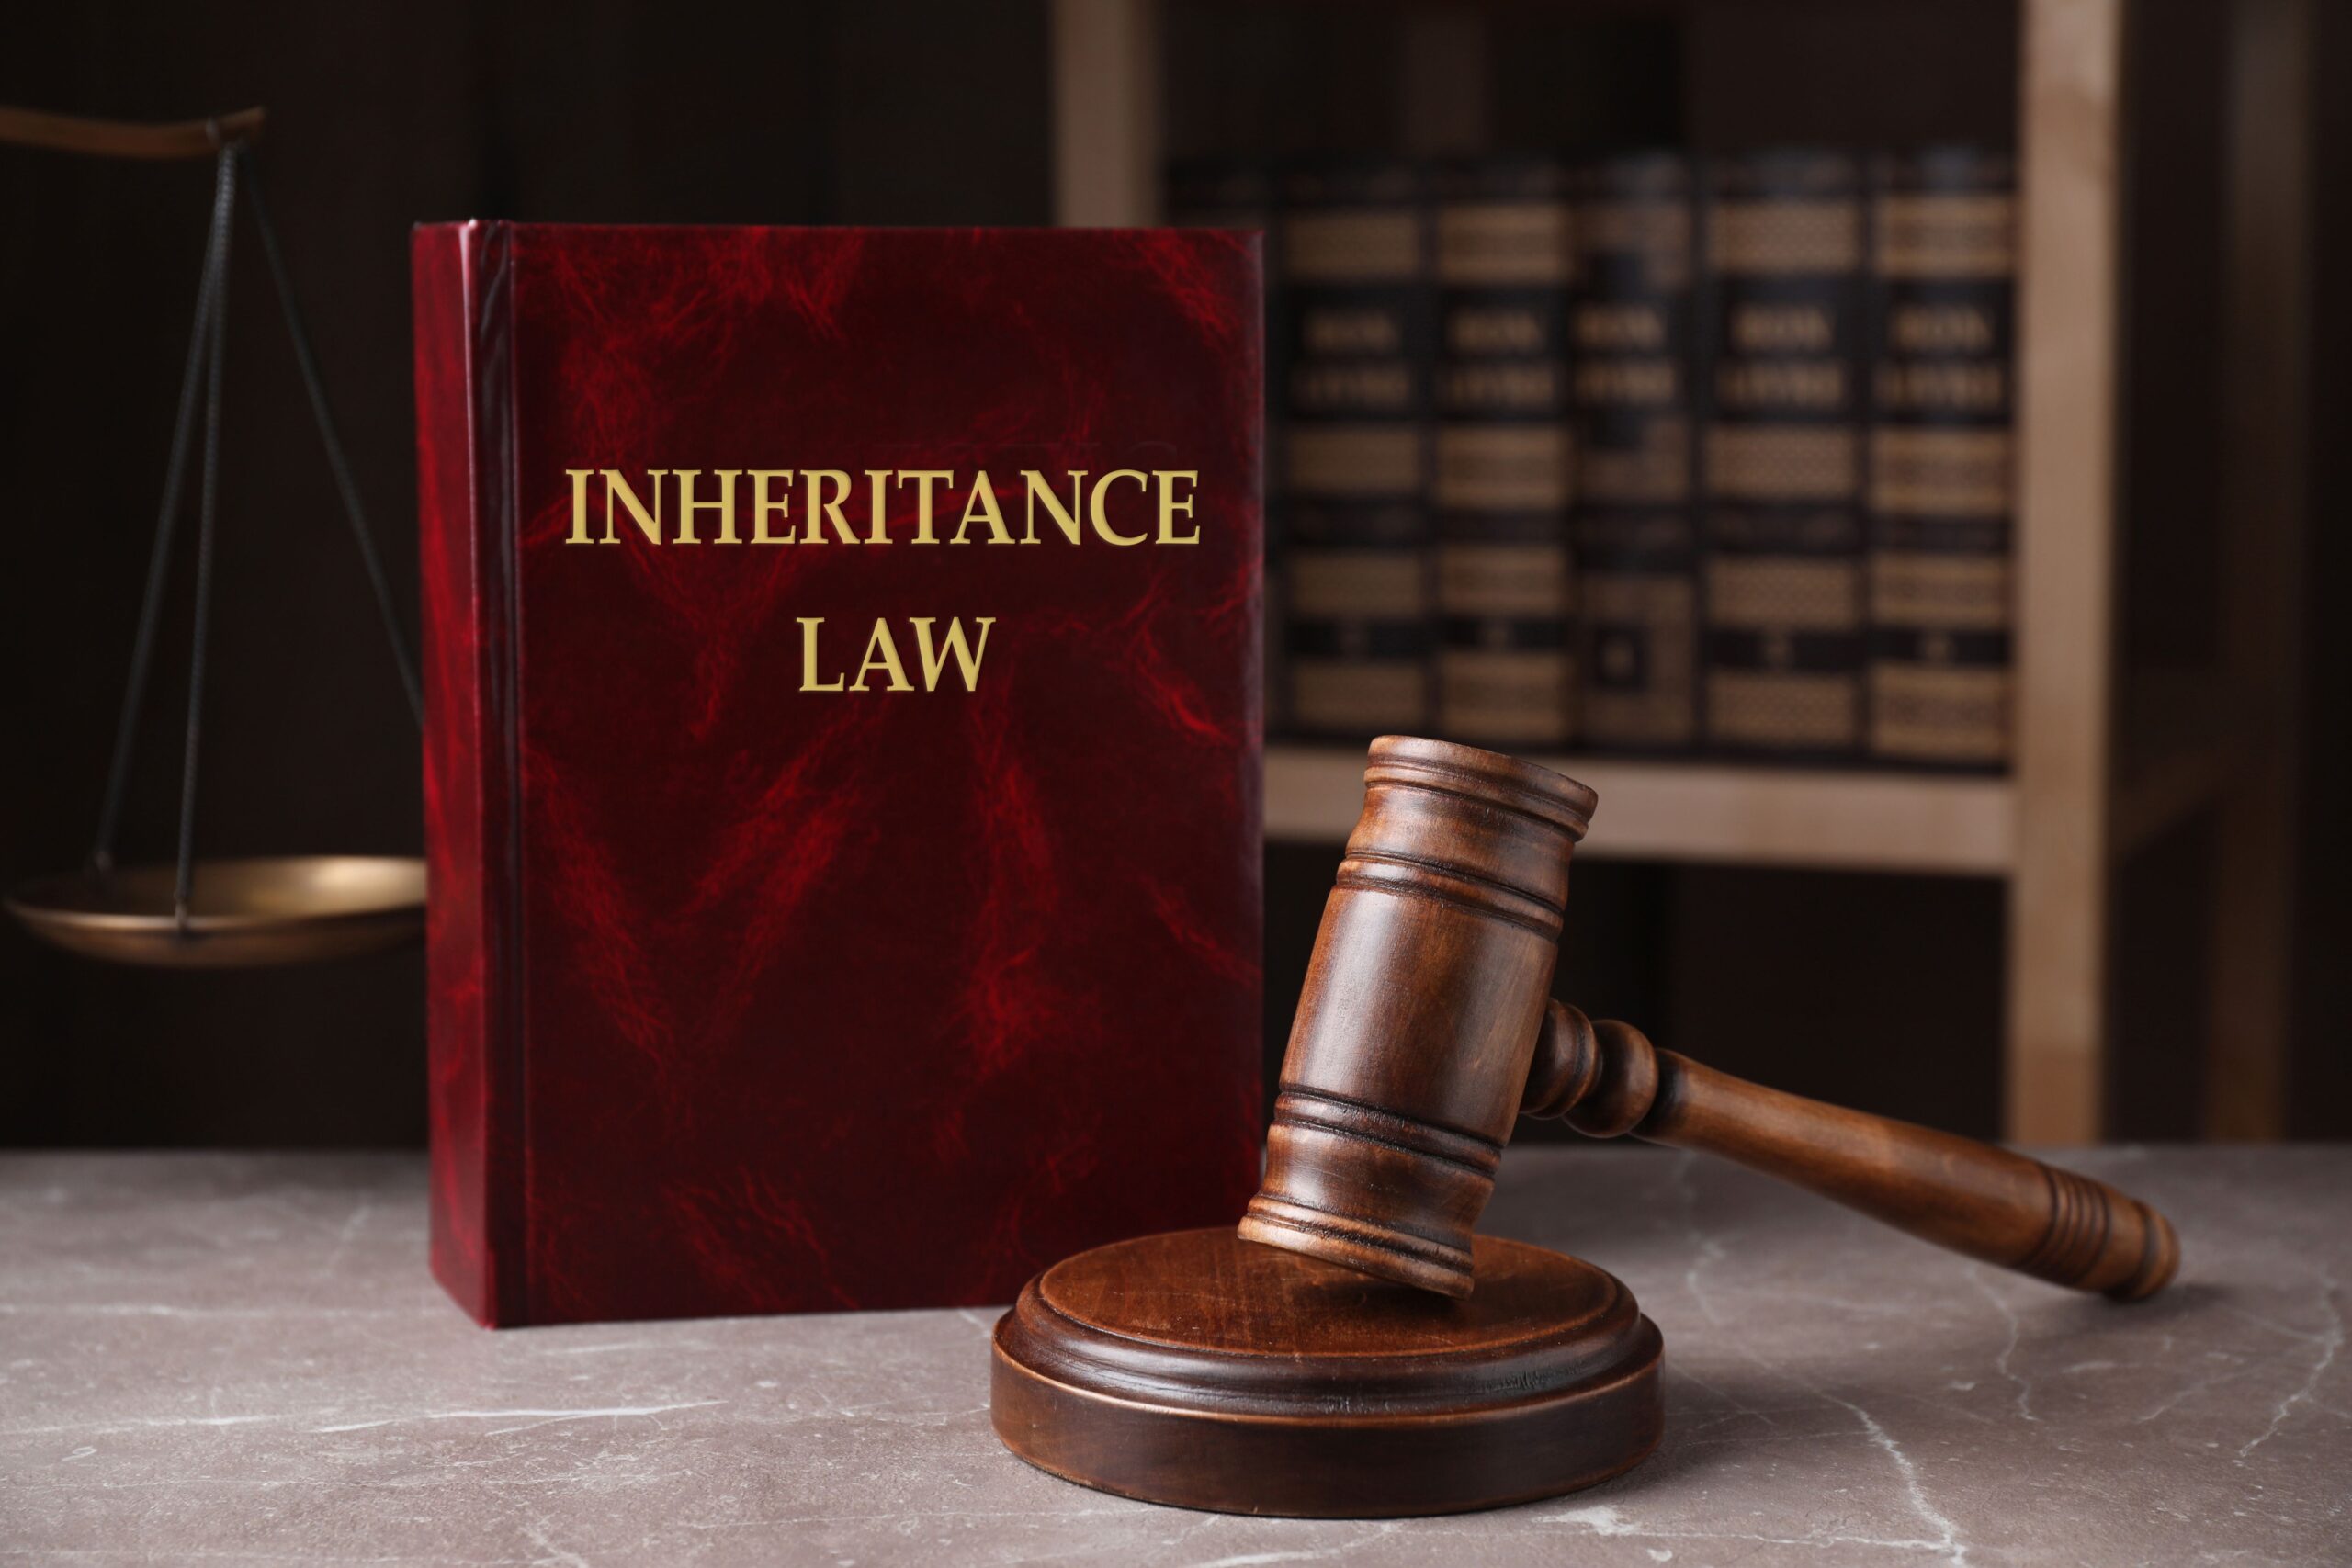 Inheritance - Inheritance